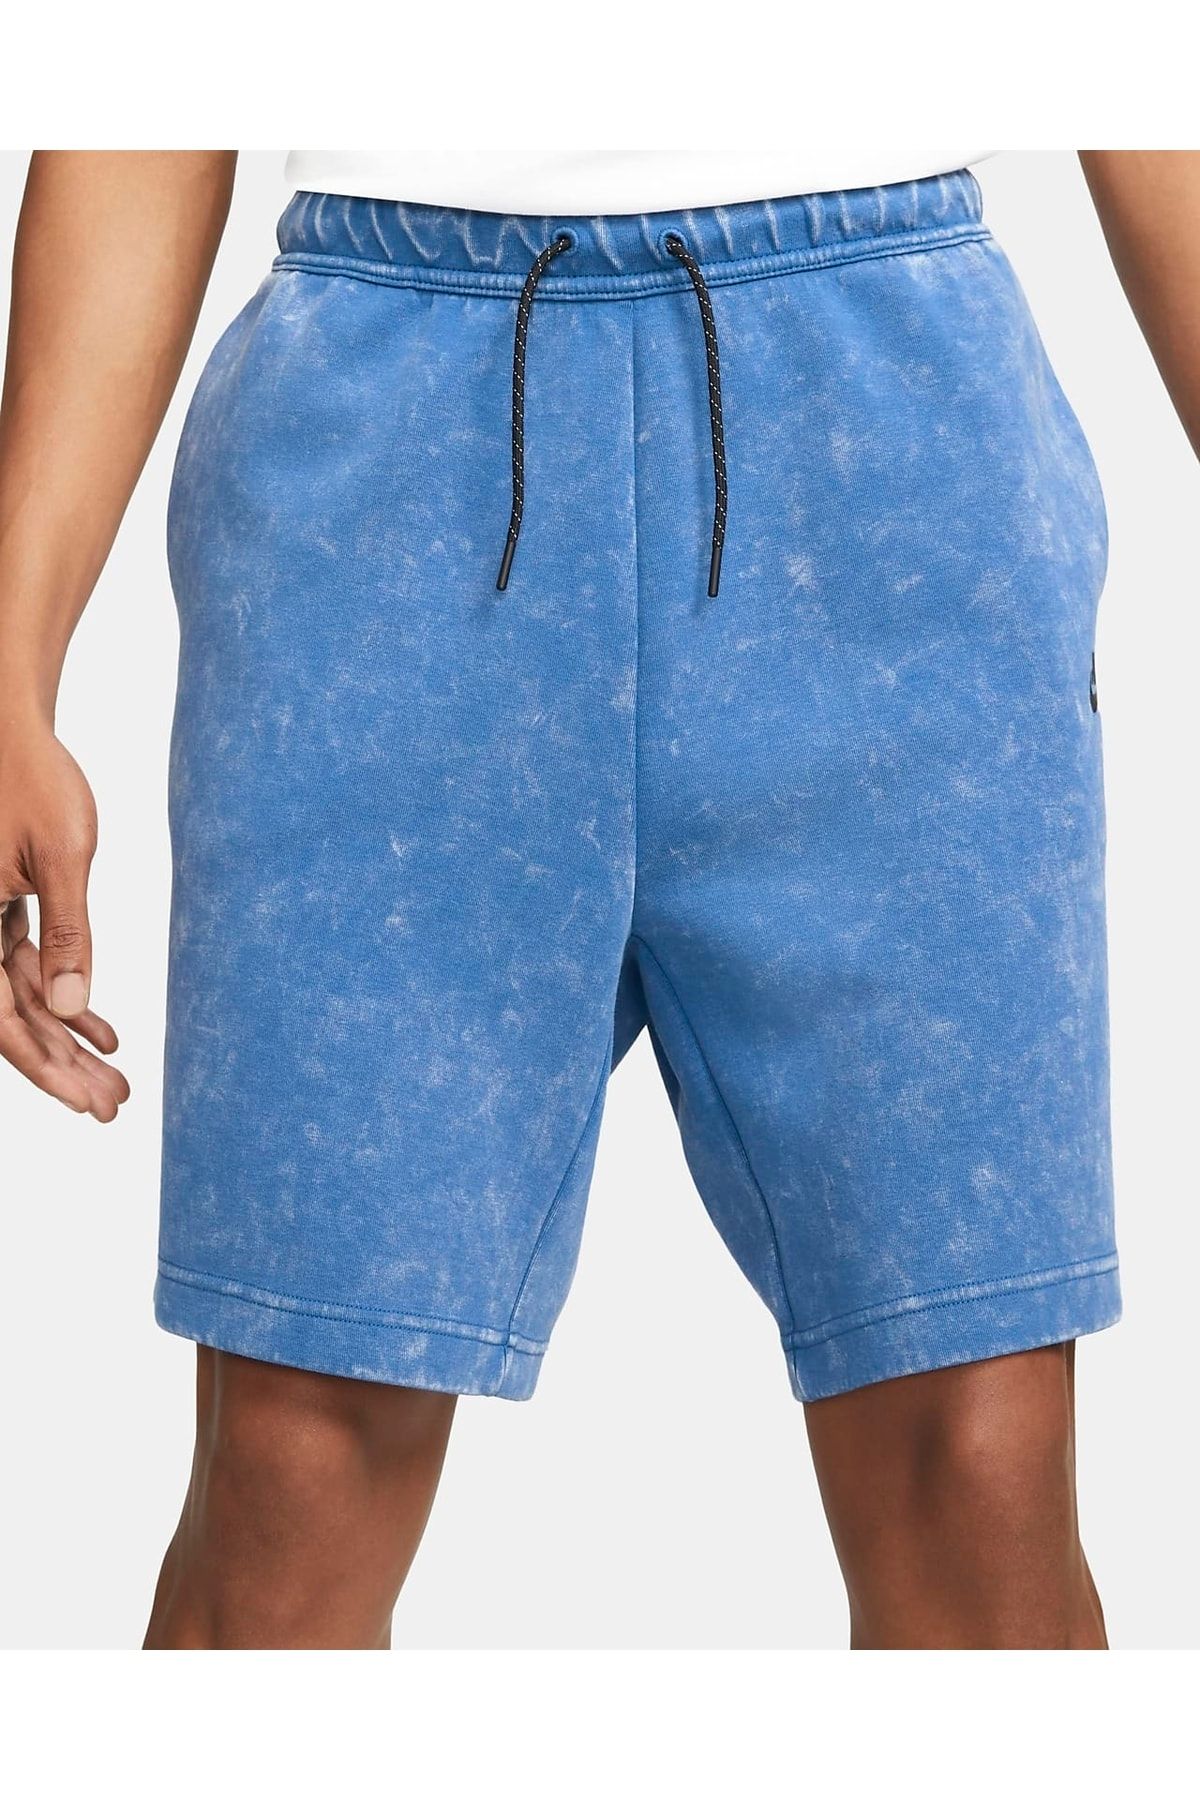 Nike Sports Shorts - Blue - Normal Waist - Trendyol